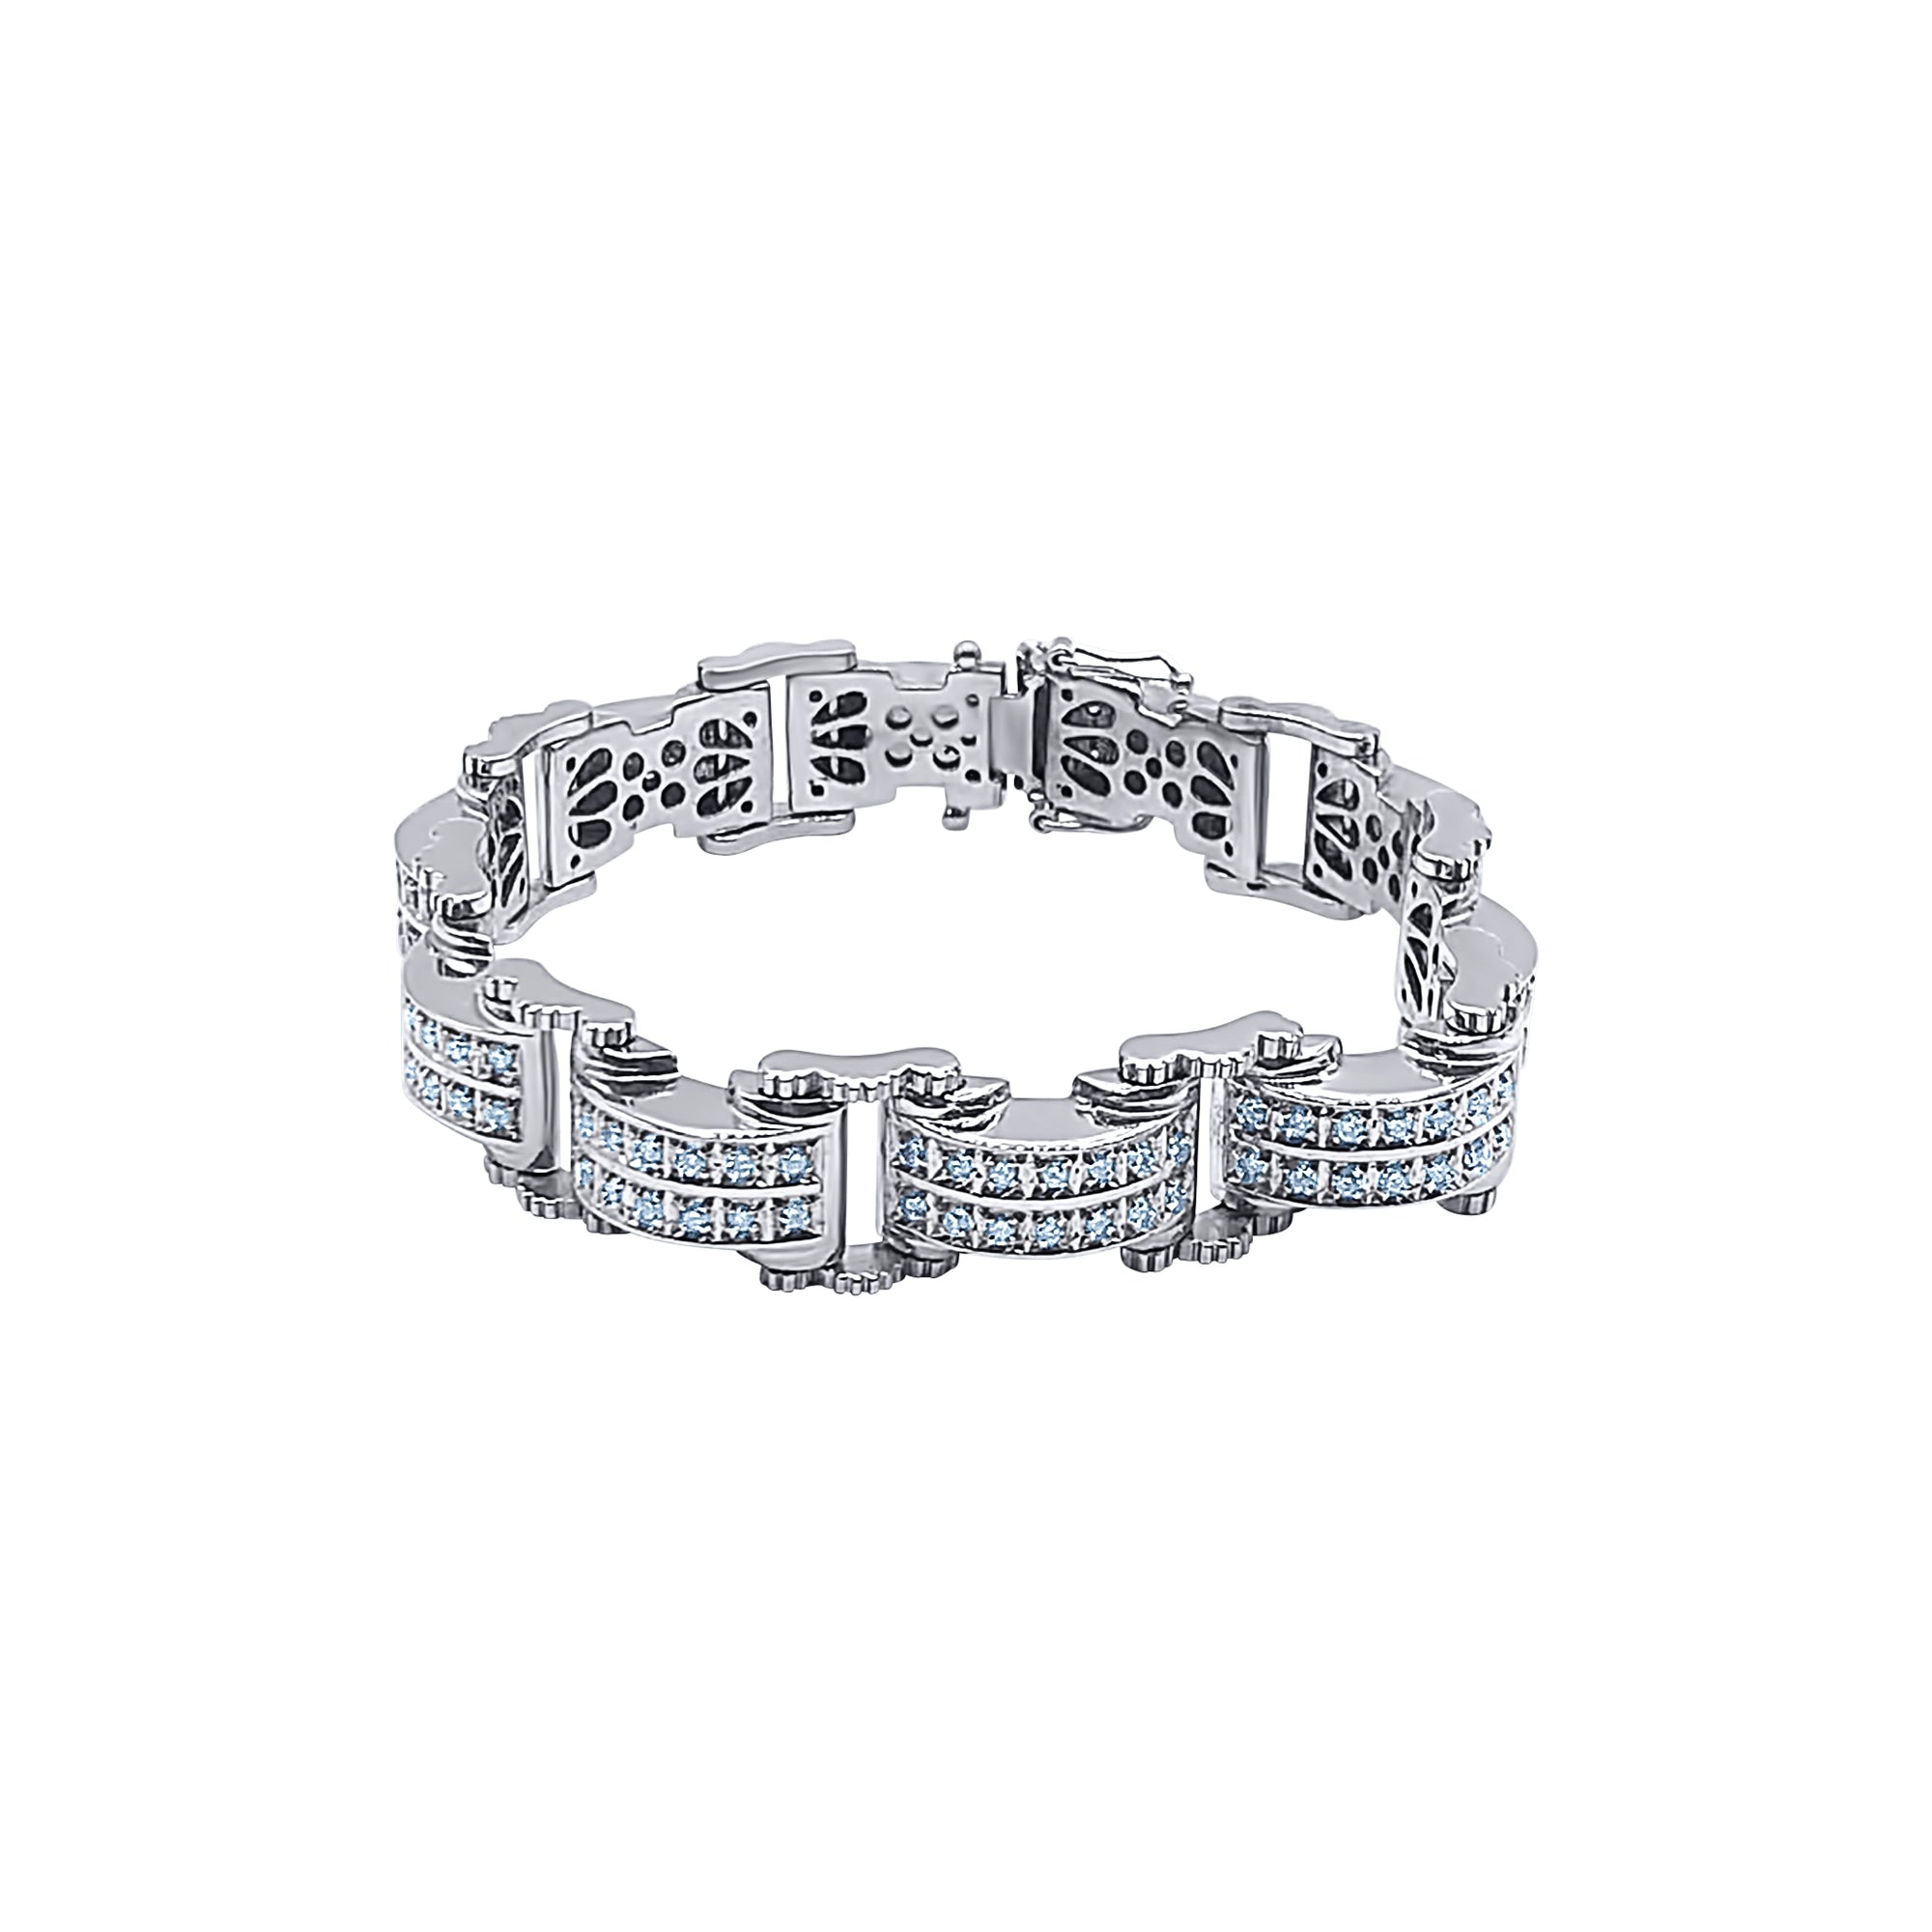 Shop Platinum Wristwear for Men | Platinum Bracelets, Kada for Men